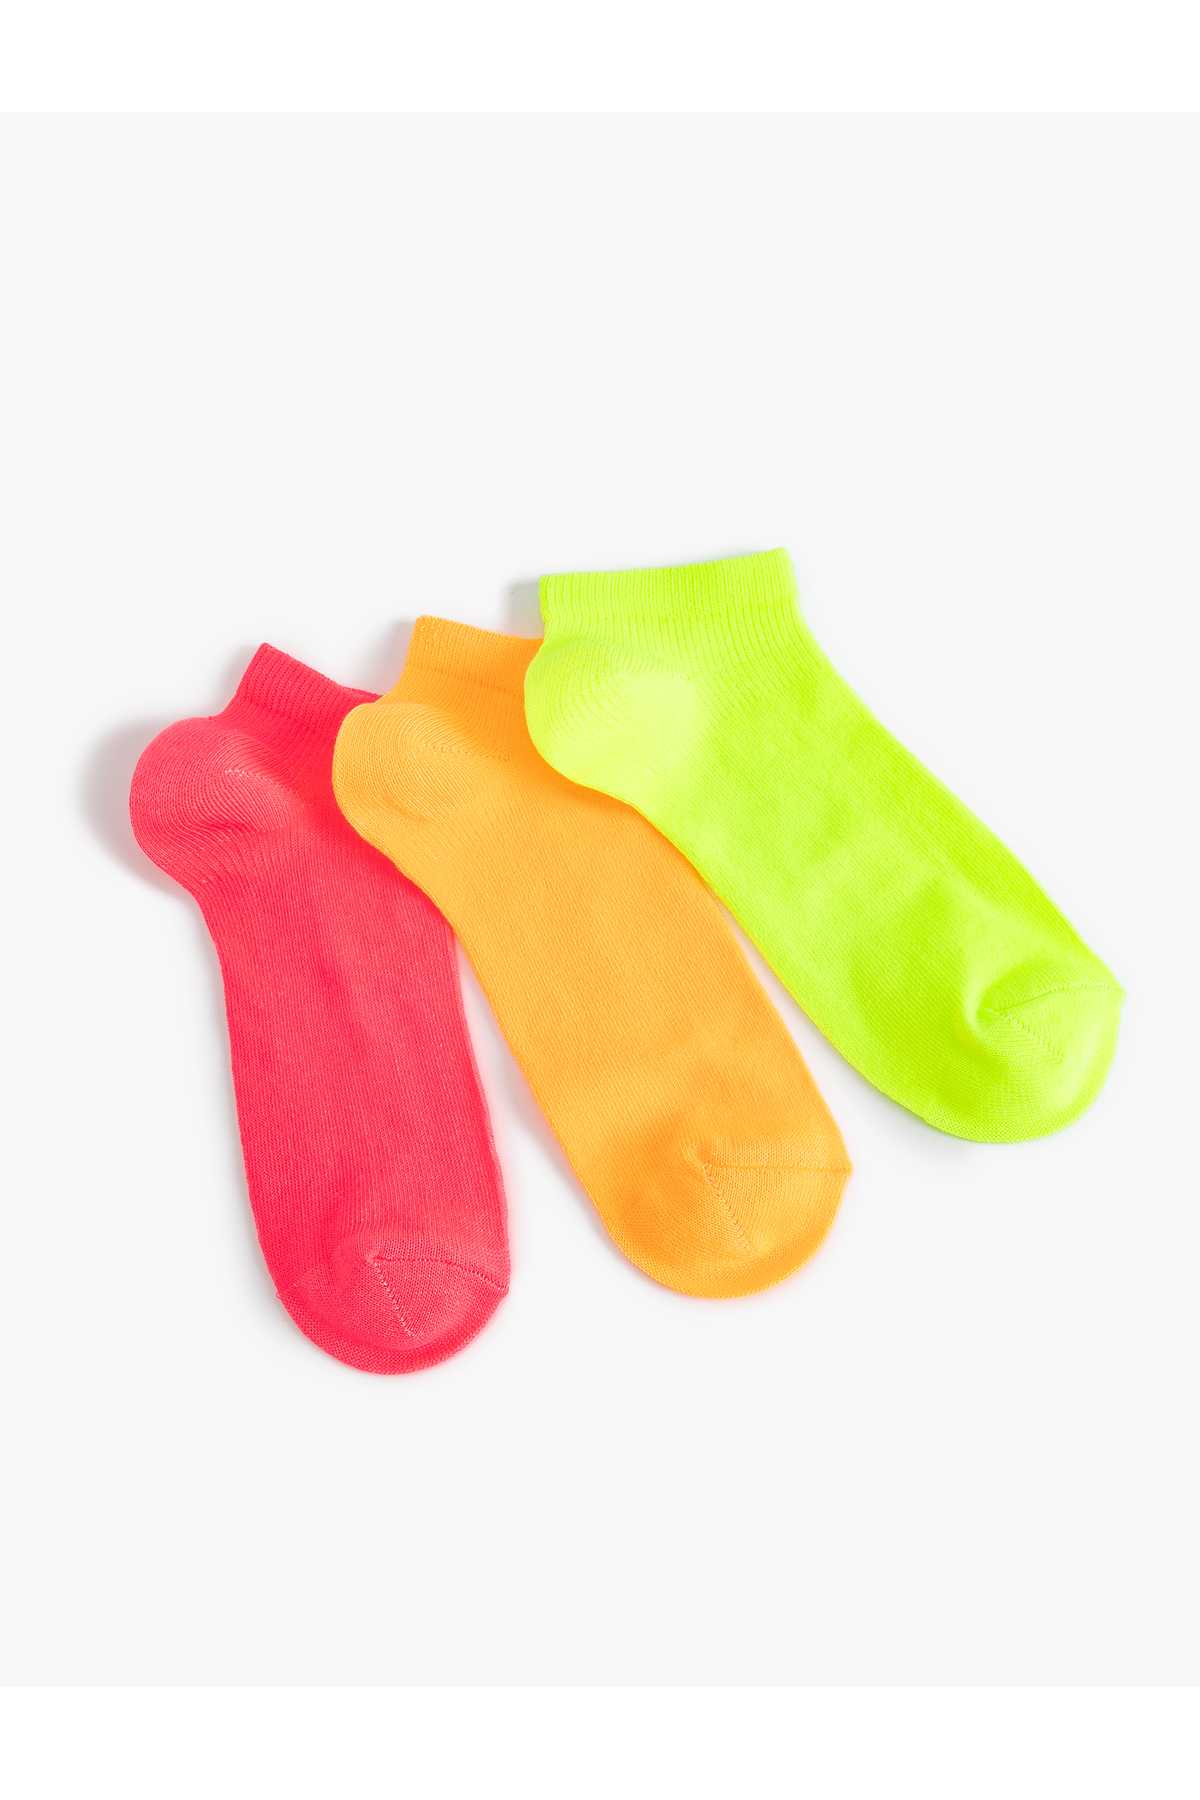 Koton 3-Pack Multi Color Basic Booties Socks Set